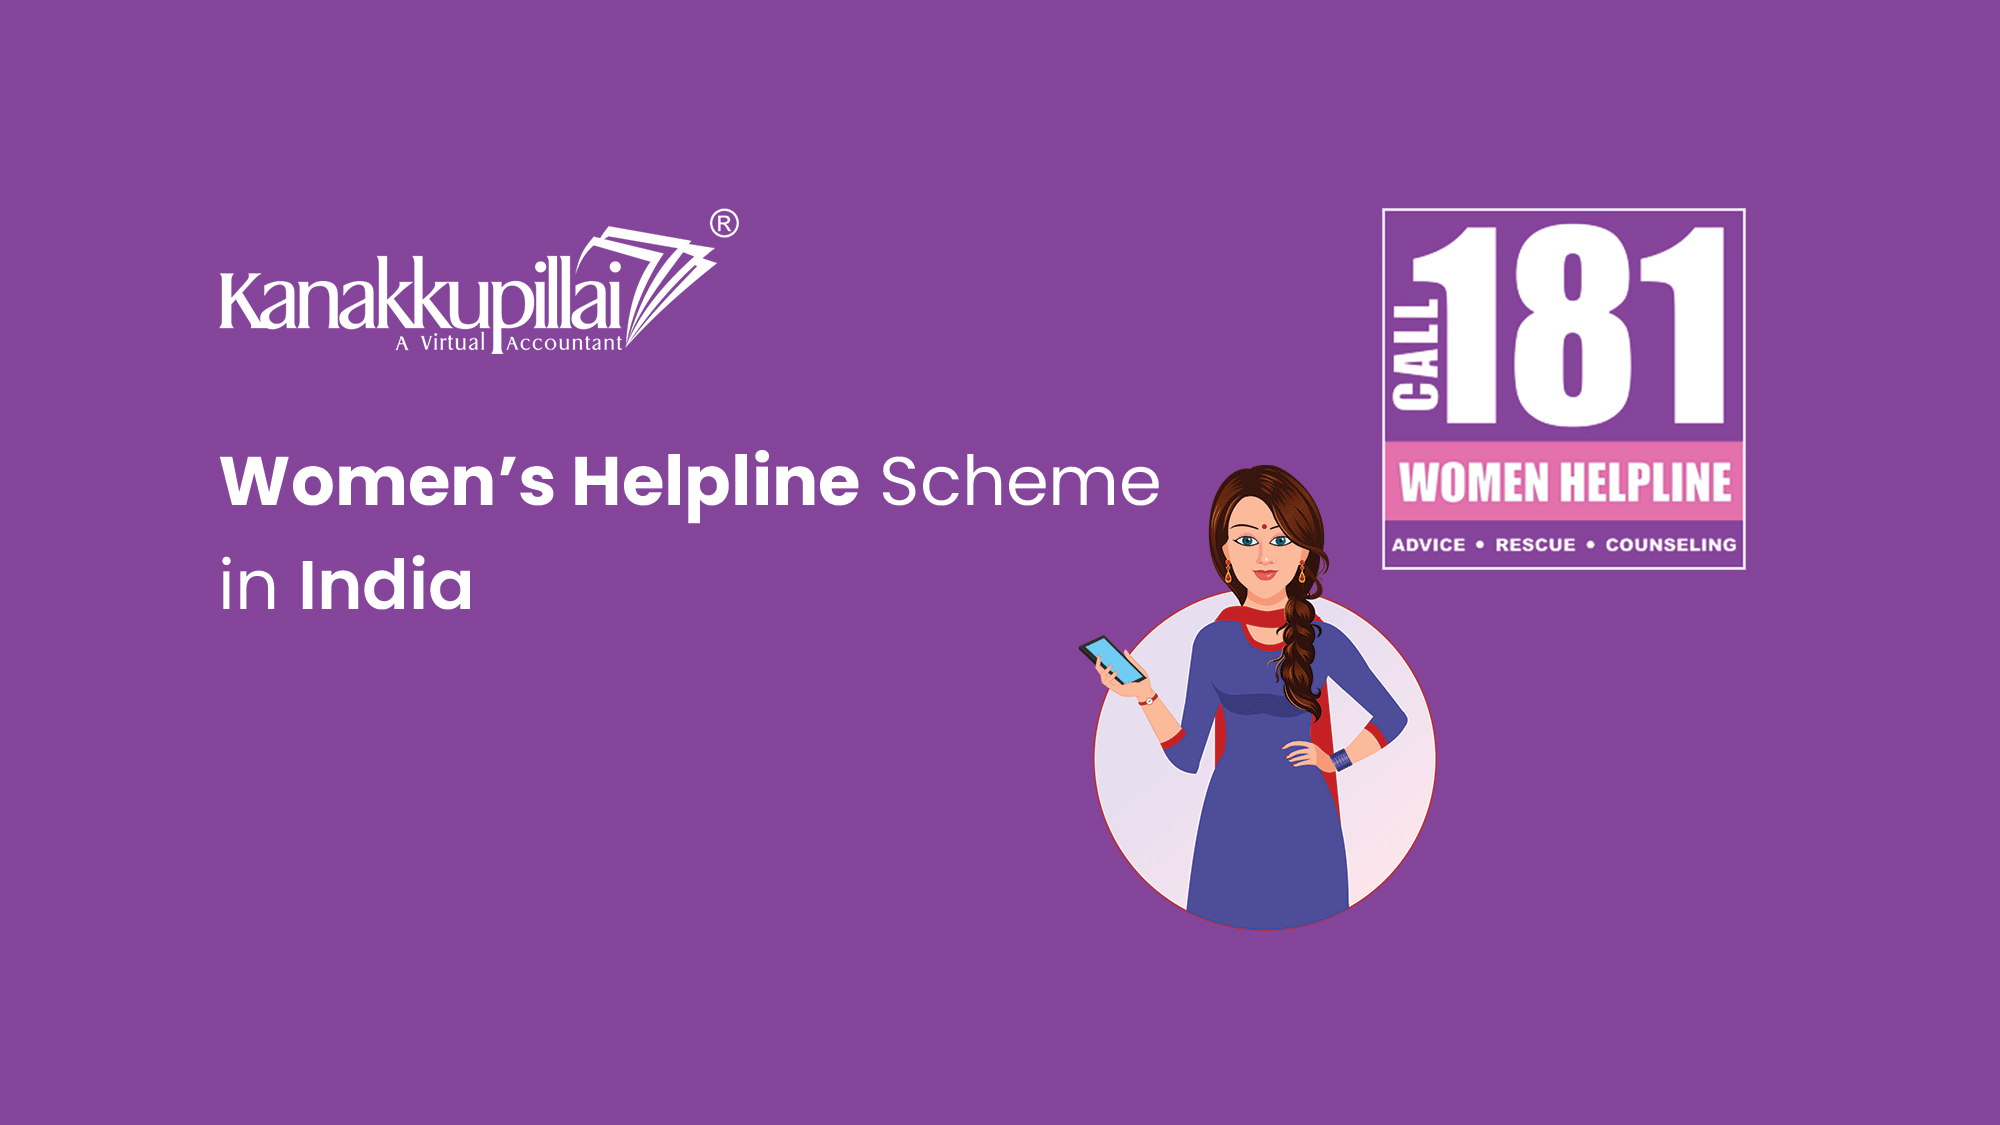 Women Helpline Scheme was Launched in India